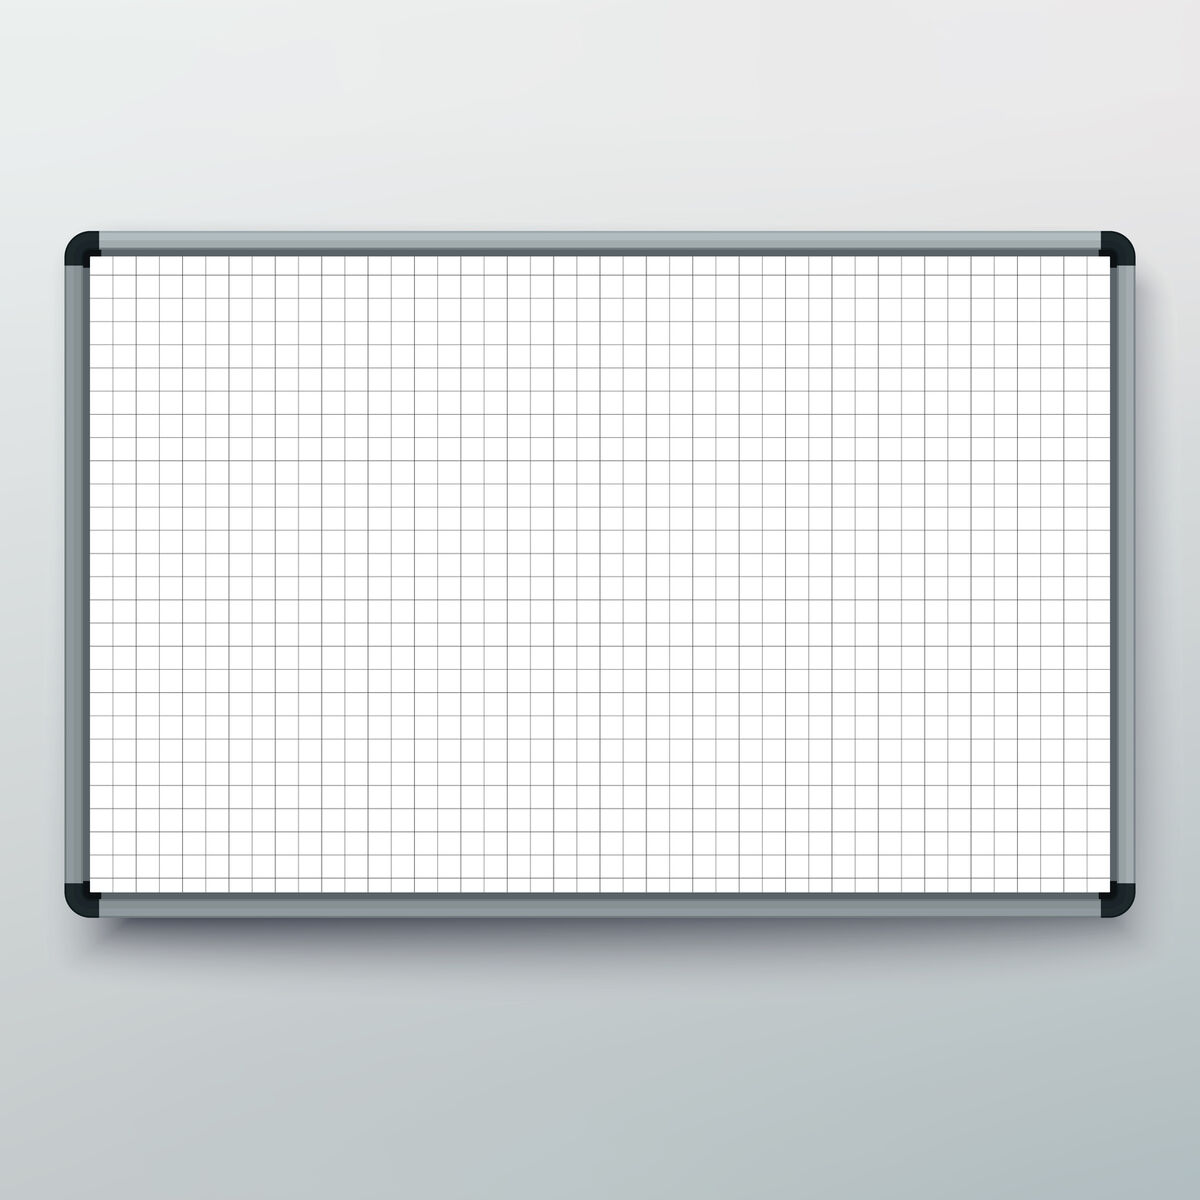 25mm-Grid---Whiteboard.jpg